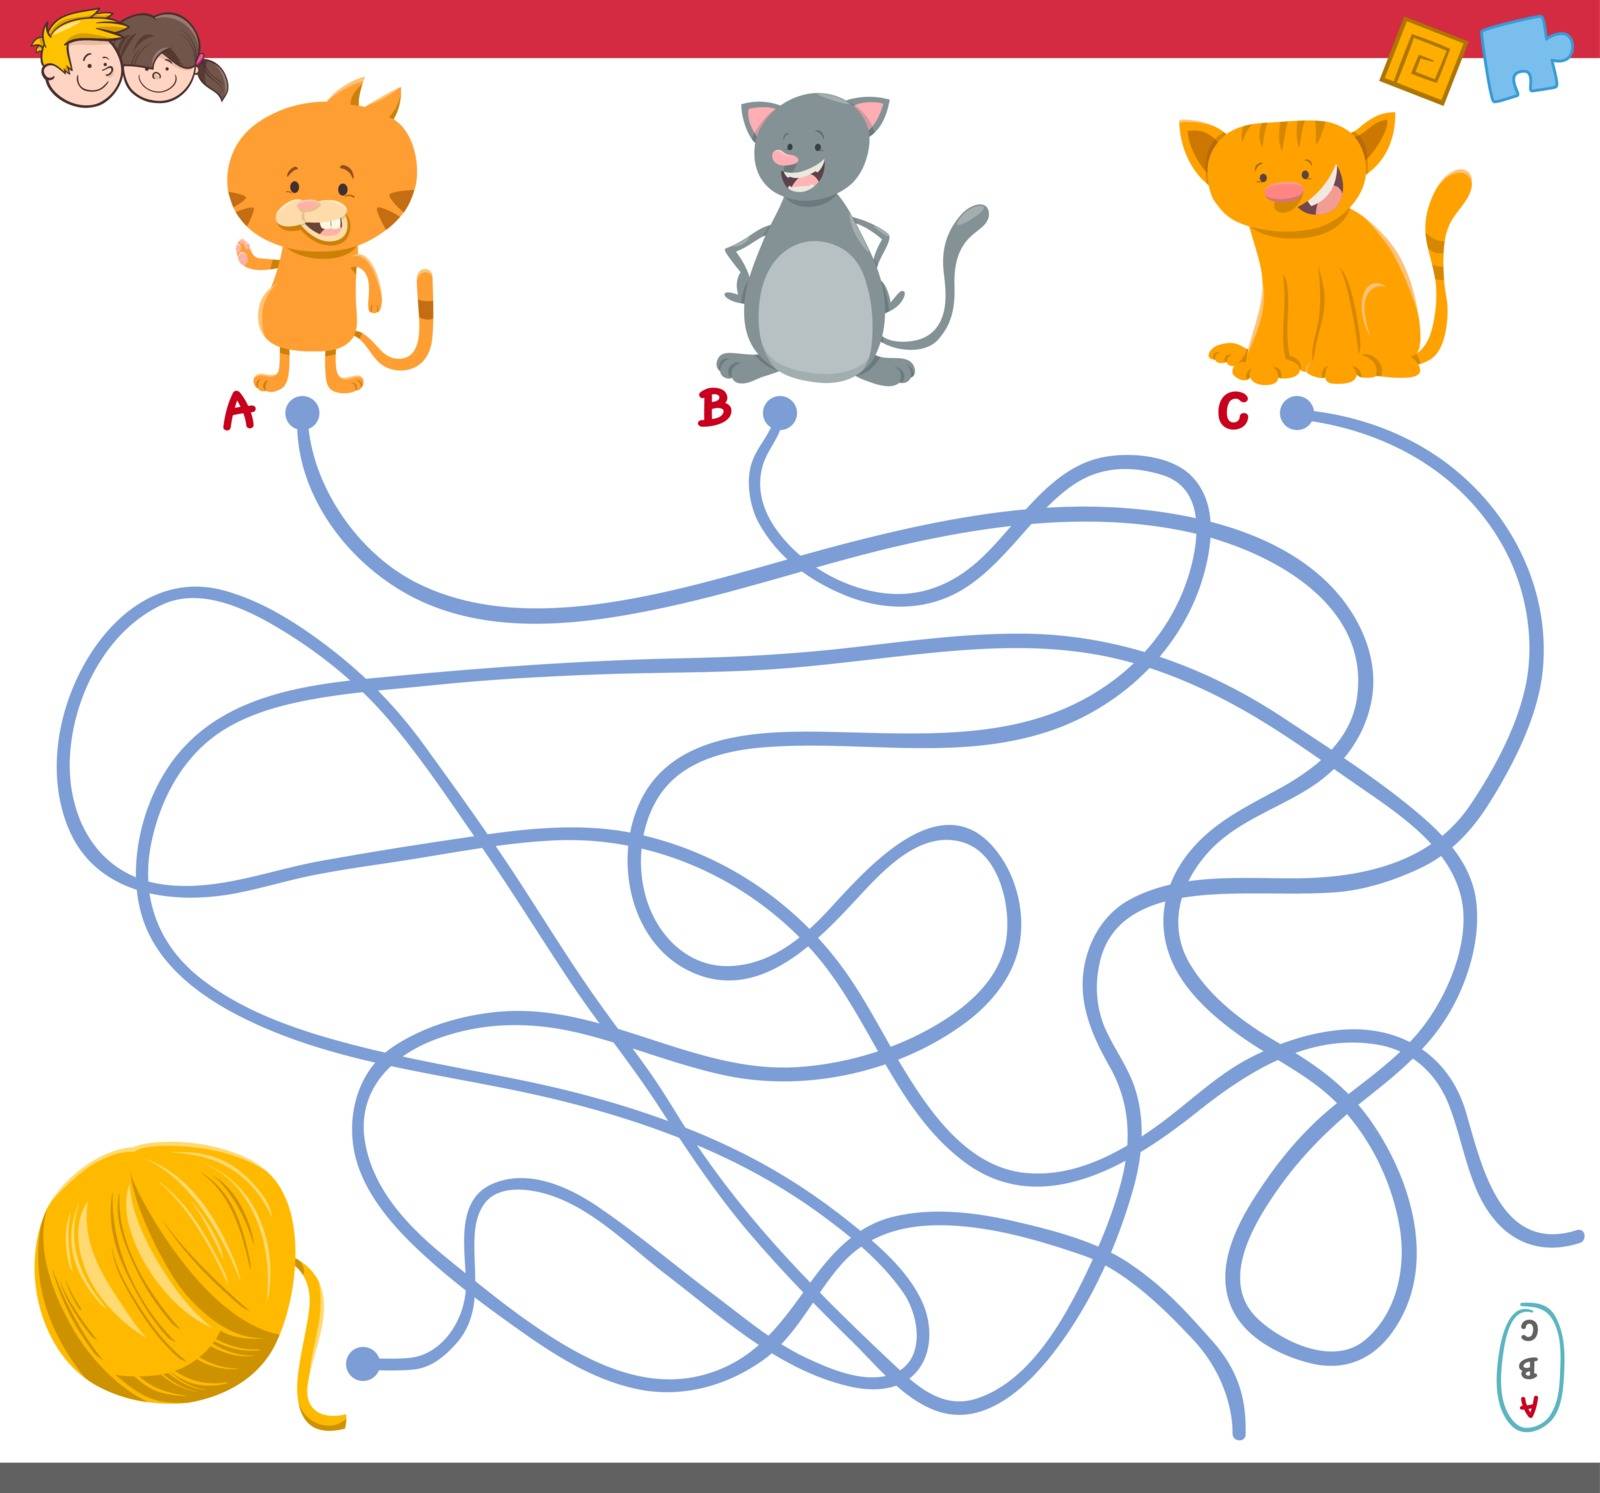 maze game with kitten characters by izakowski